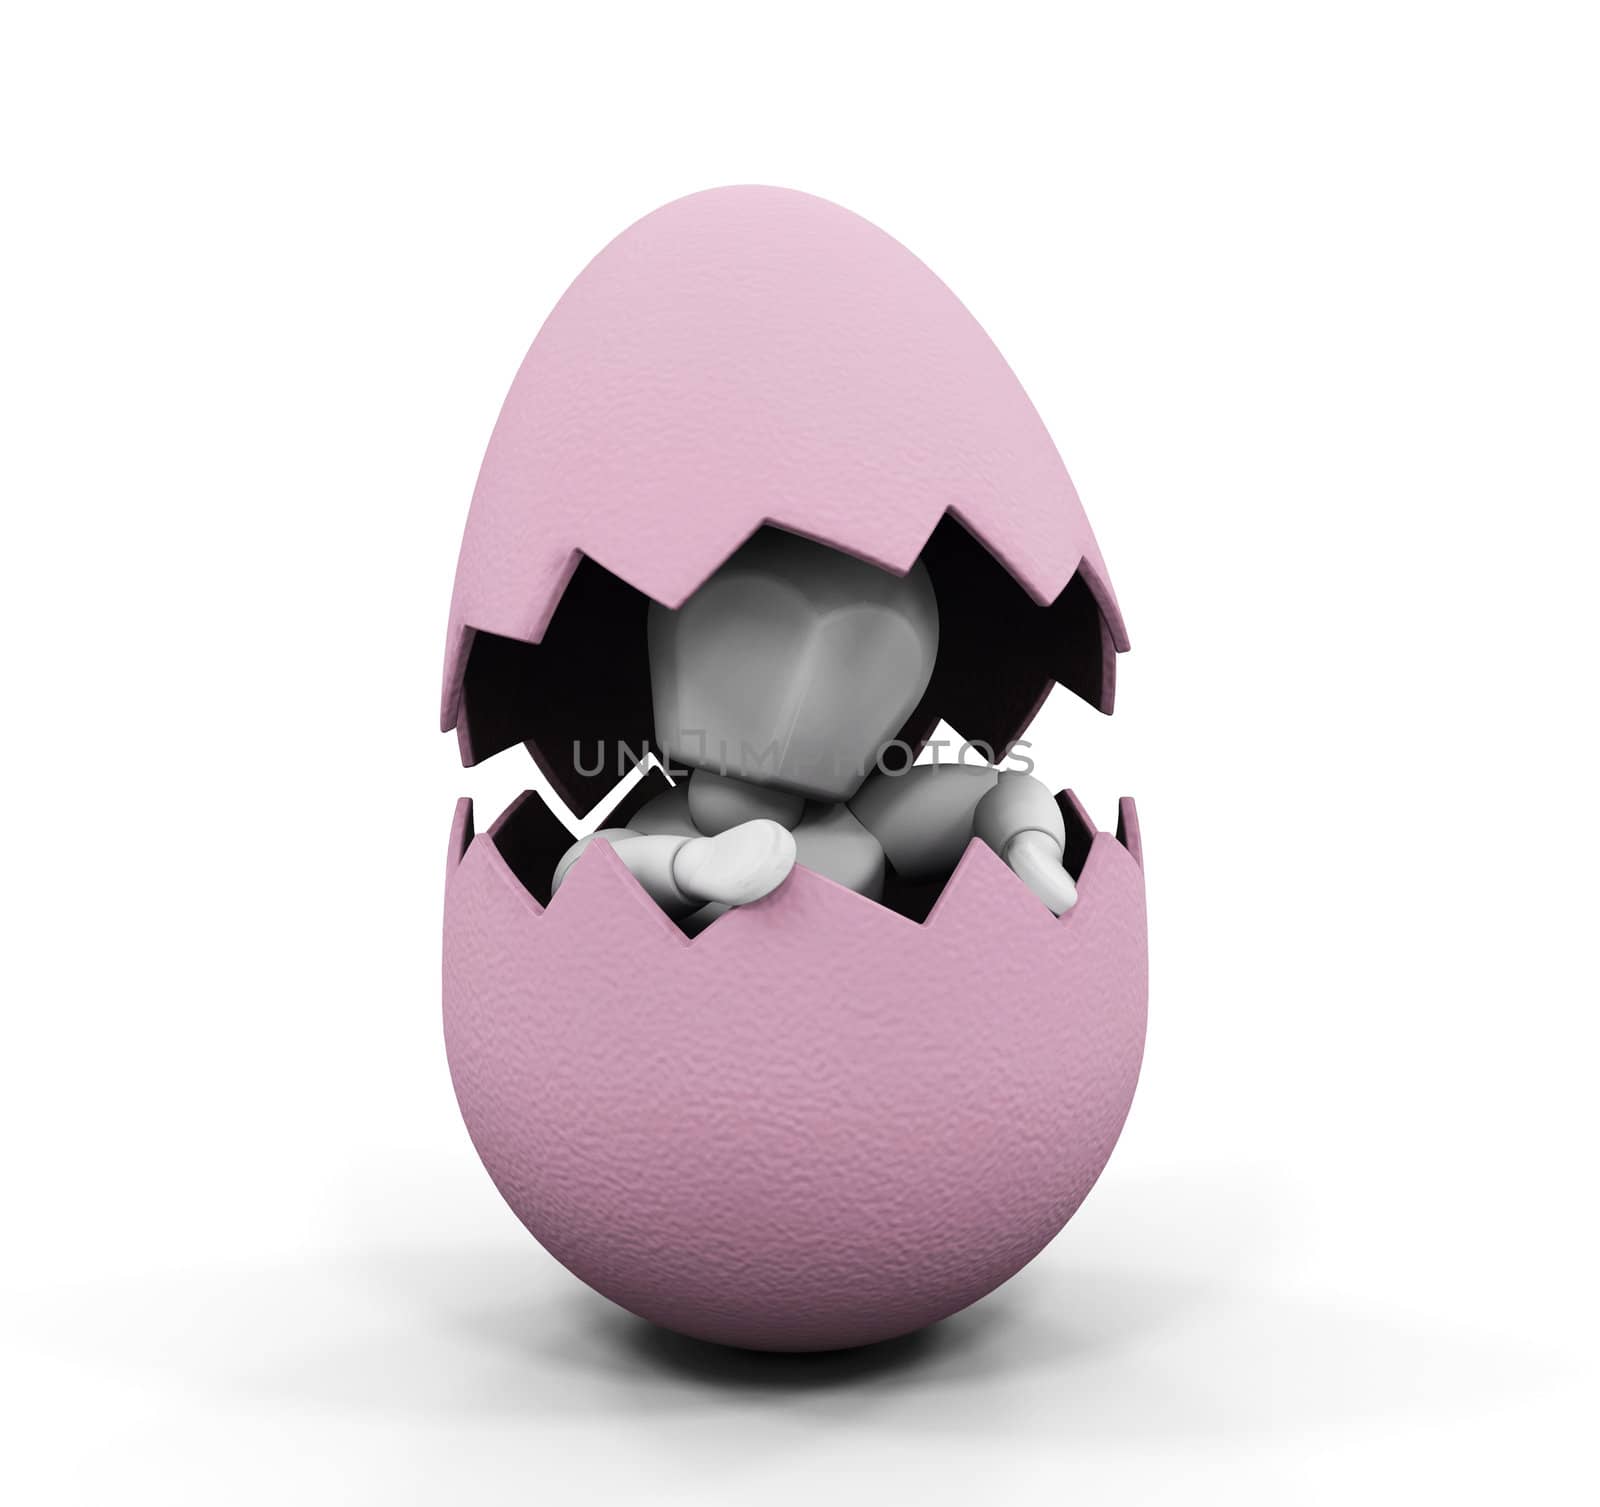 3D render of someone inside an Easter egg